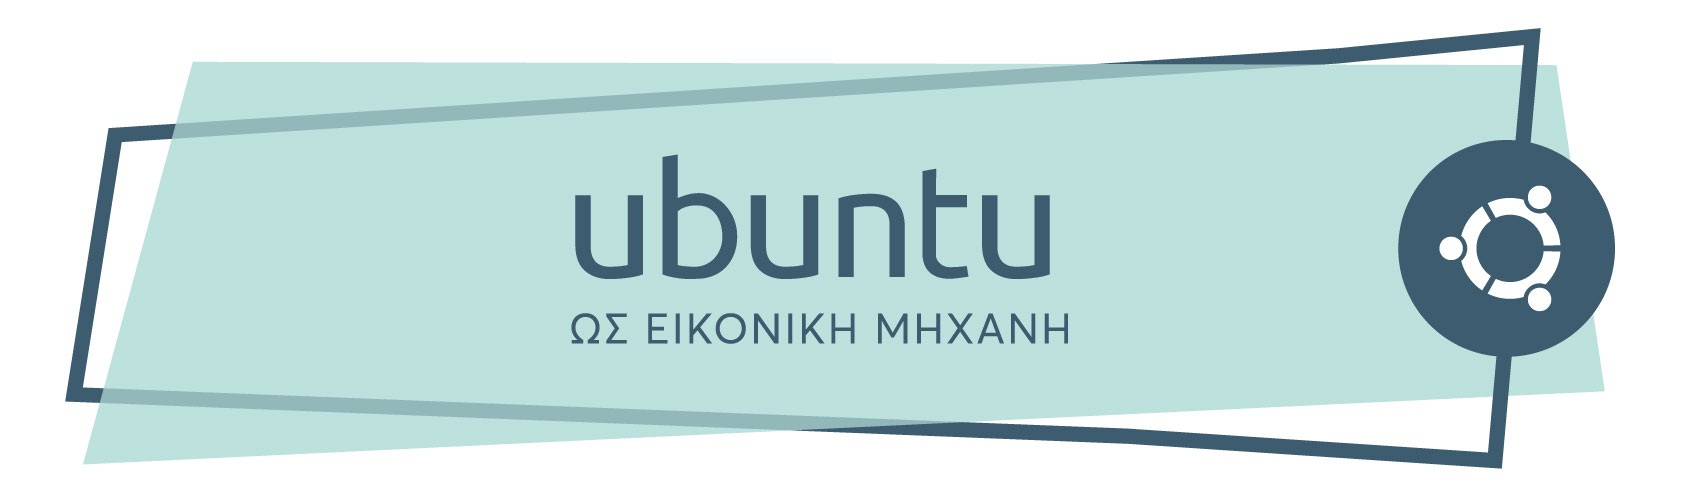 ubuntu virtual machine